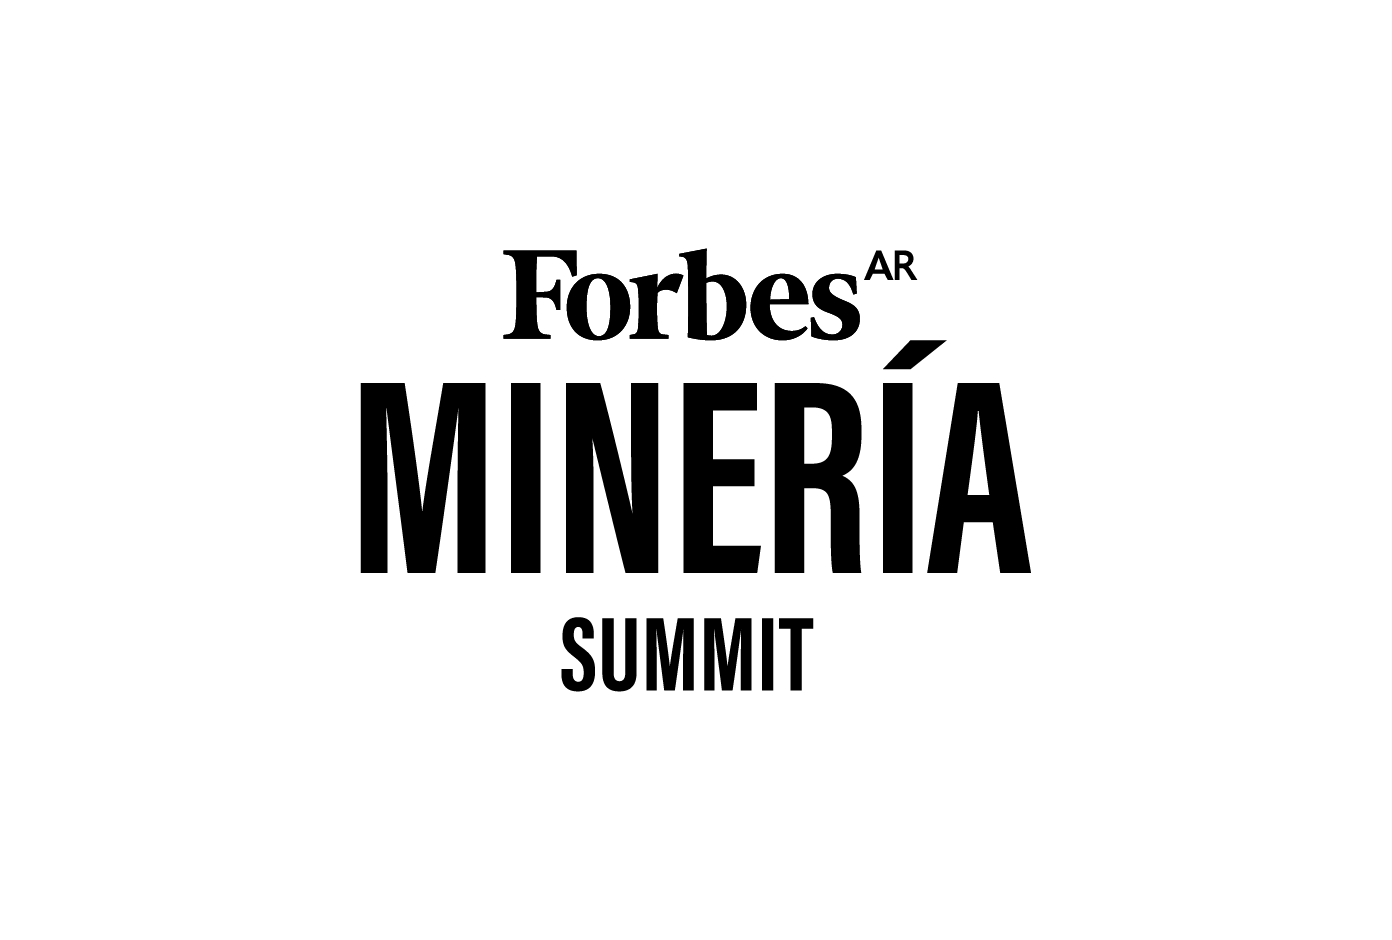 Mineria Summit